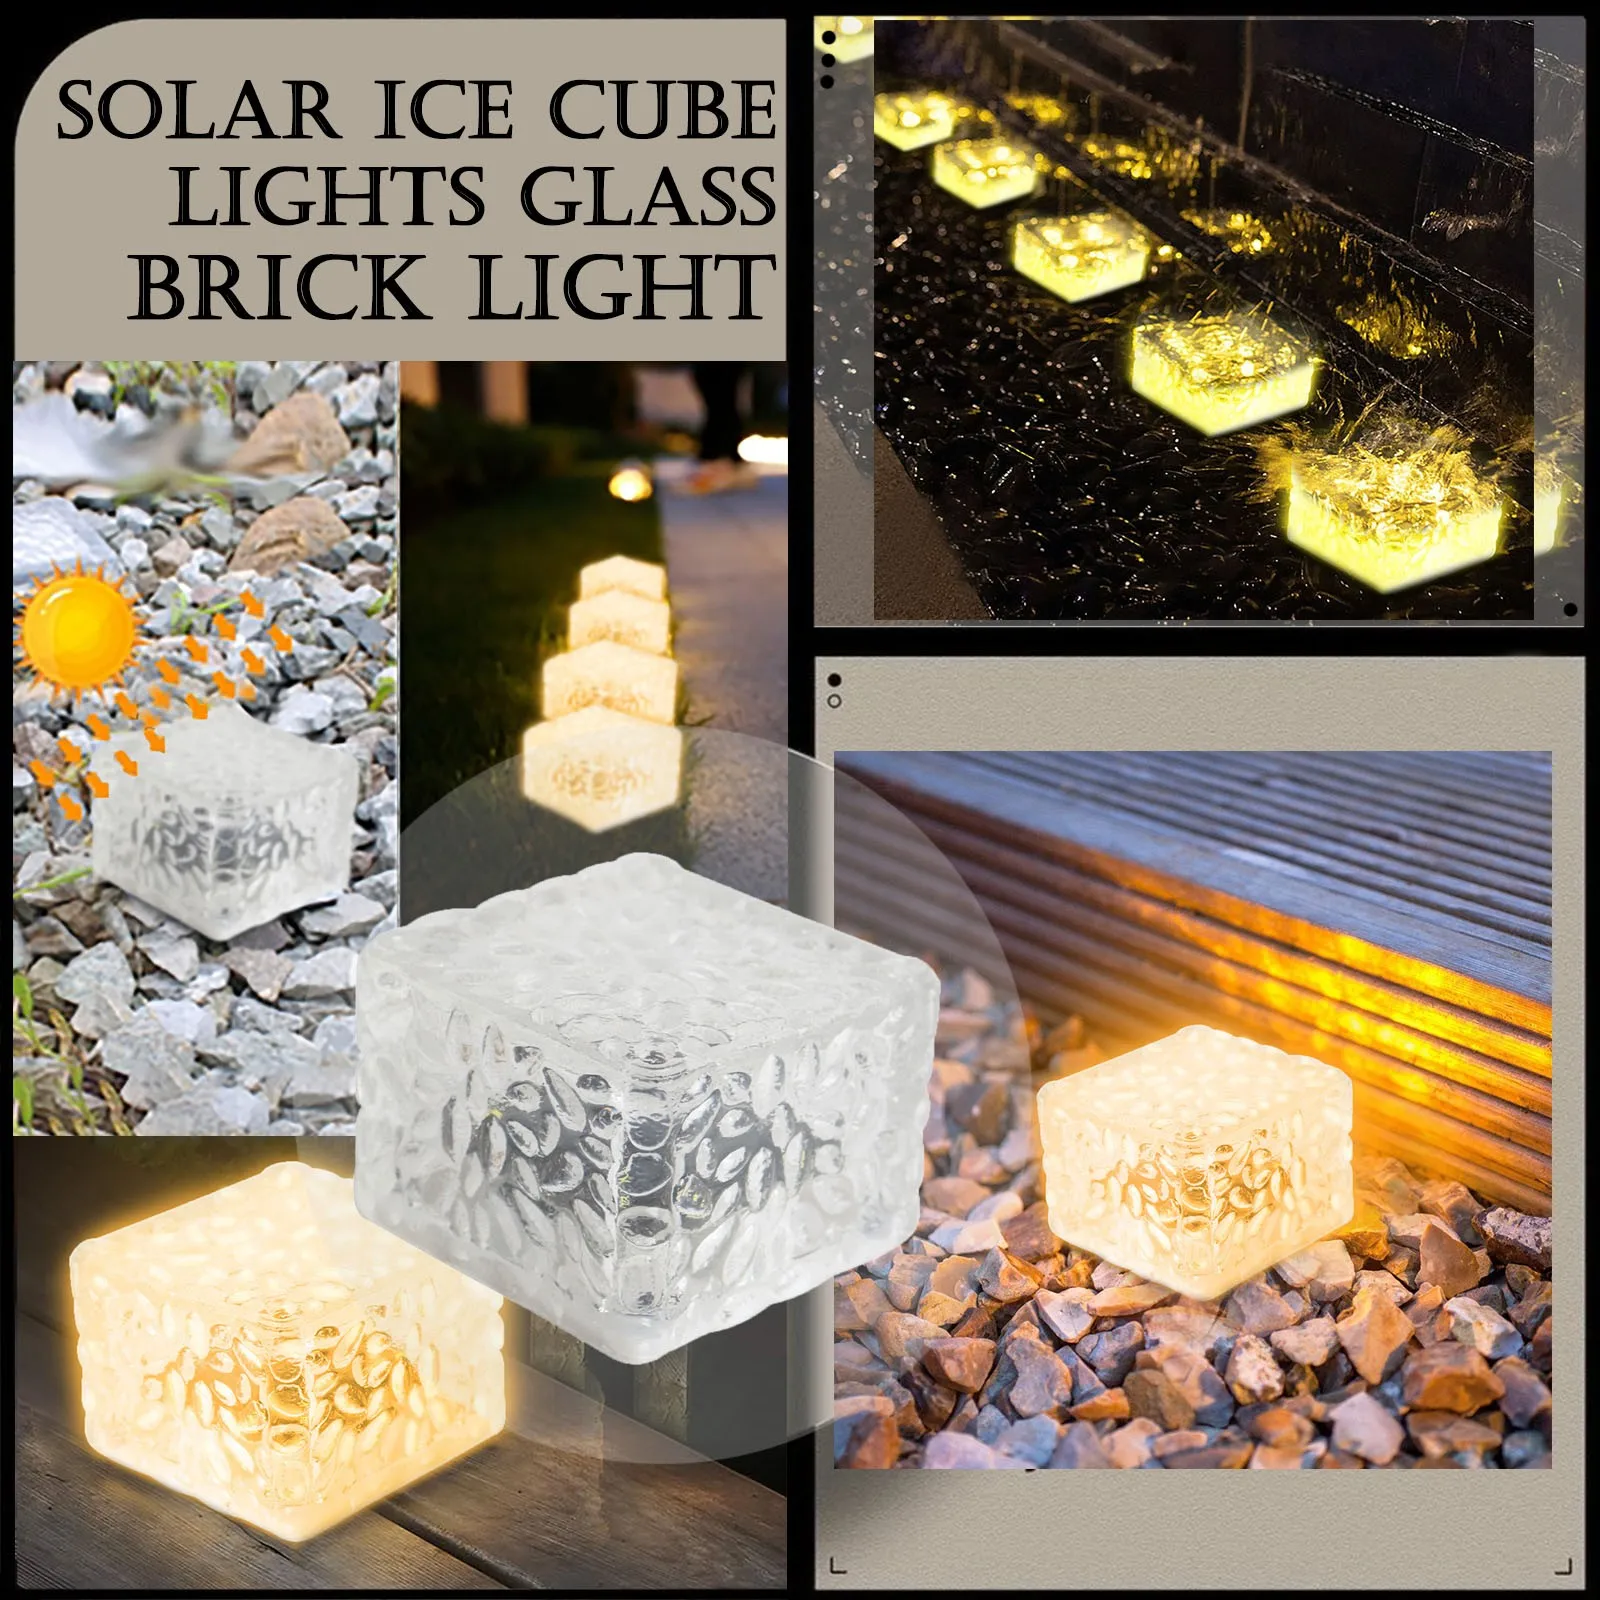 Ice Brick Light Solar Light Dwaterproof Home Buried Decor Garden Outdoor W2T7 